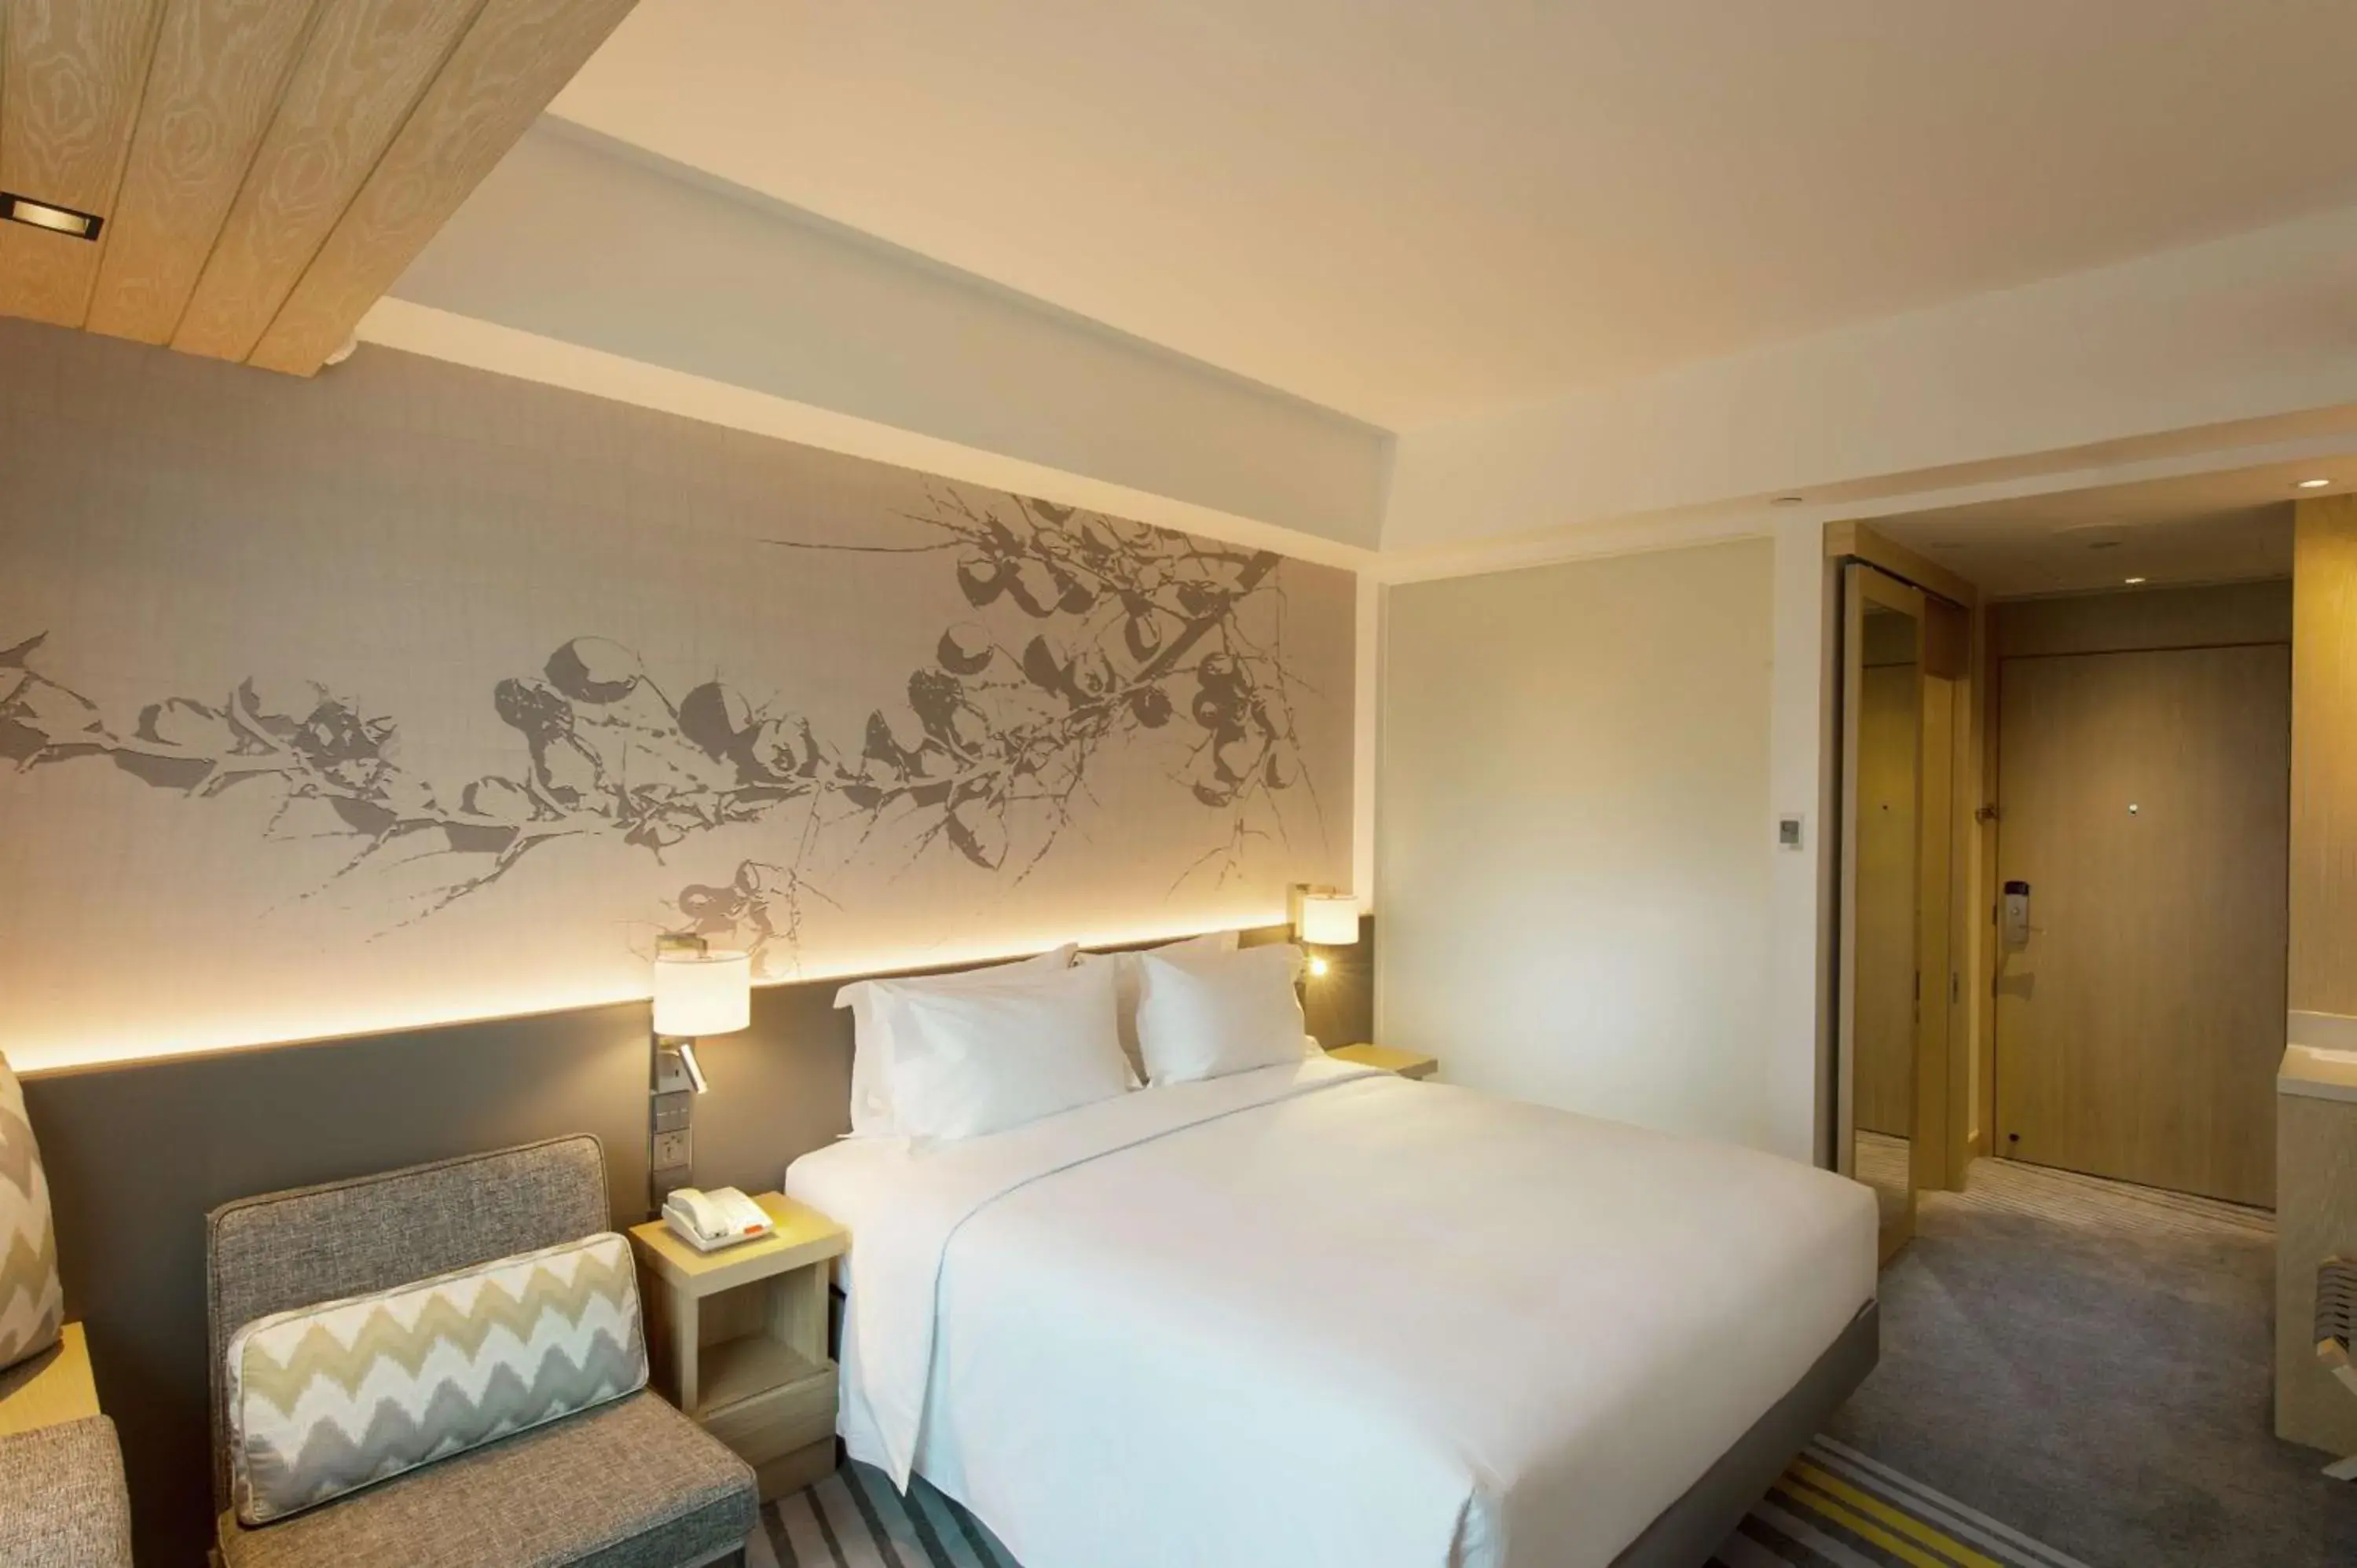 Bed in Hilton Garden Inn Singapore Serangoon